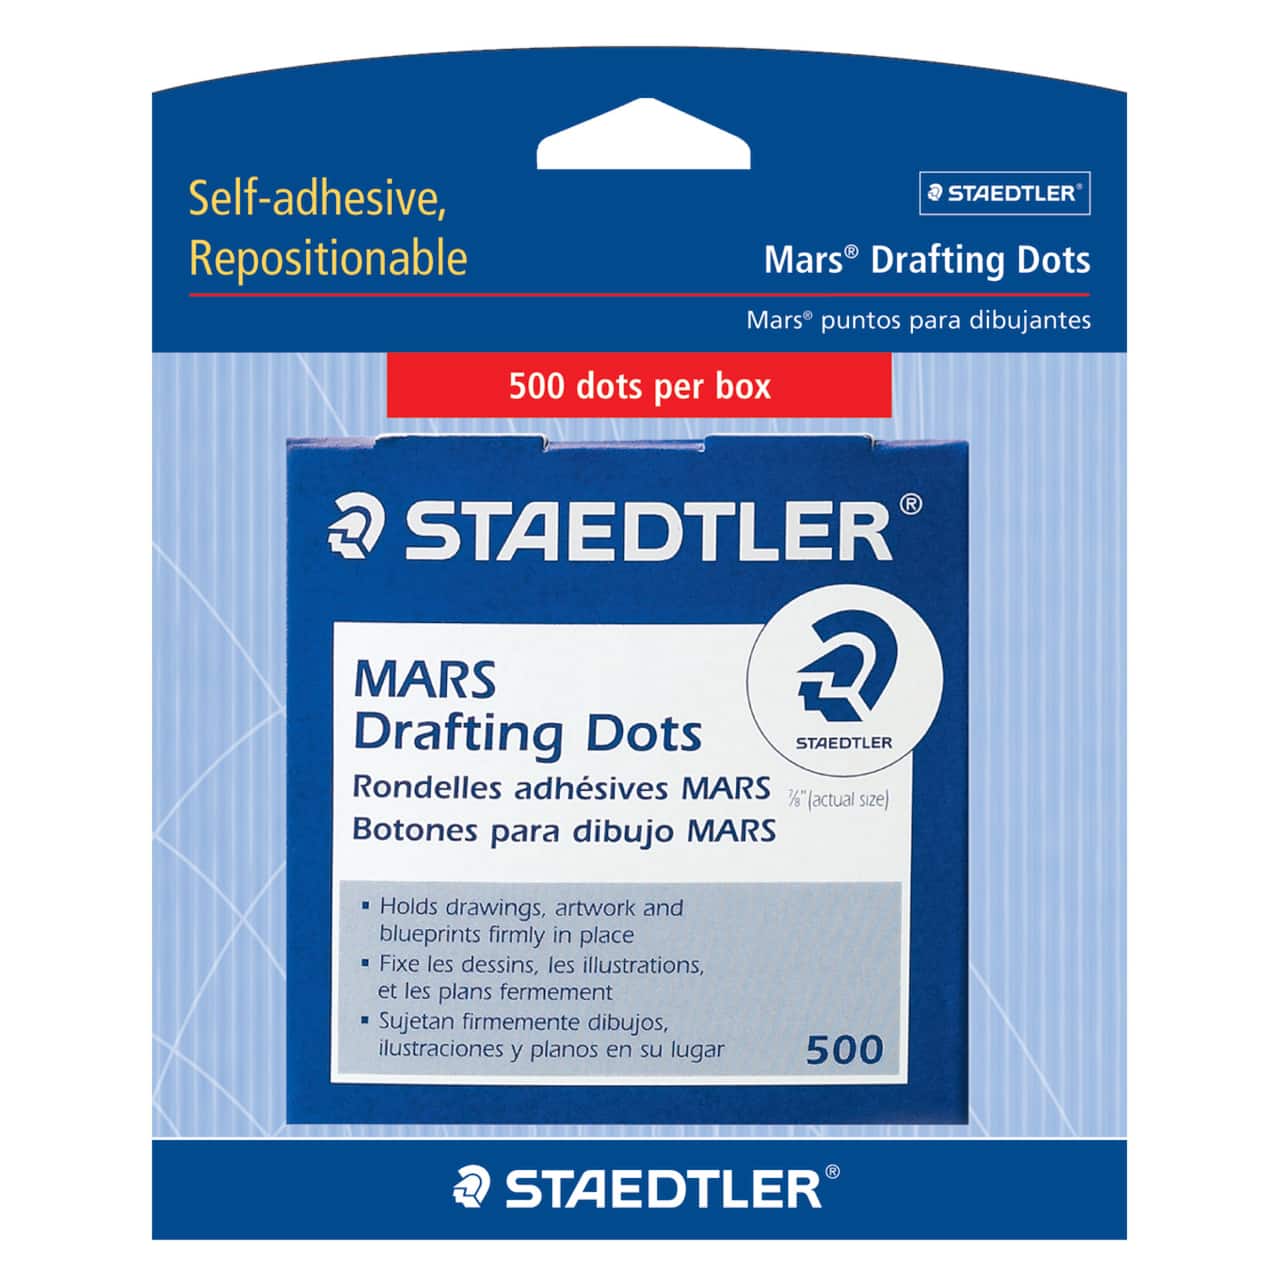 Staedtler® Mars® Drafting Dots